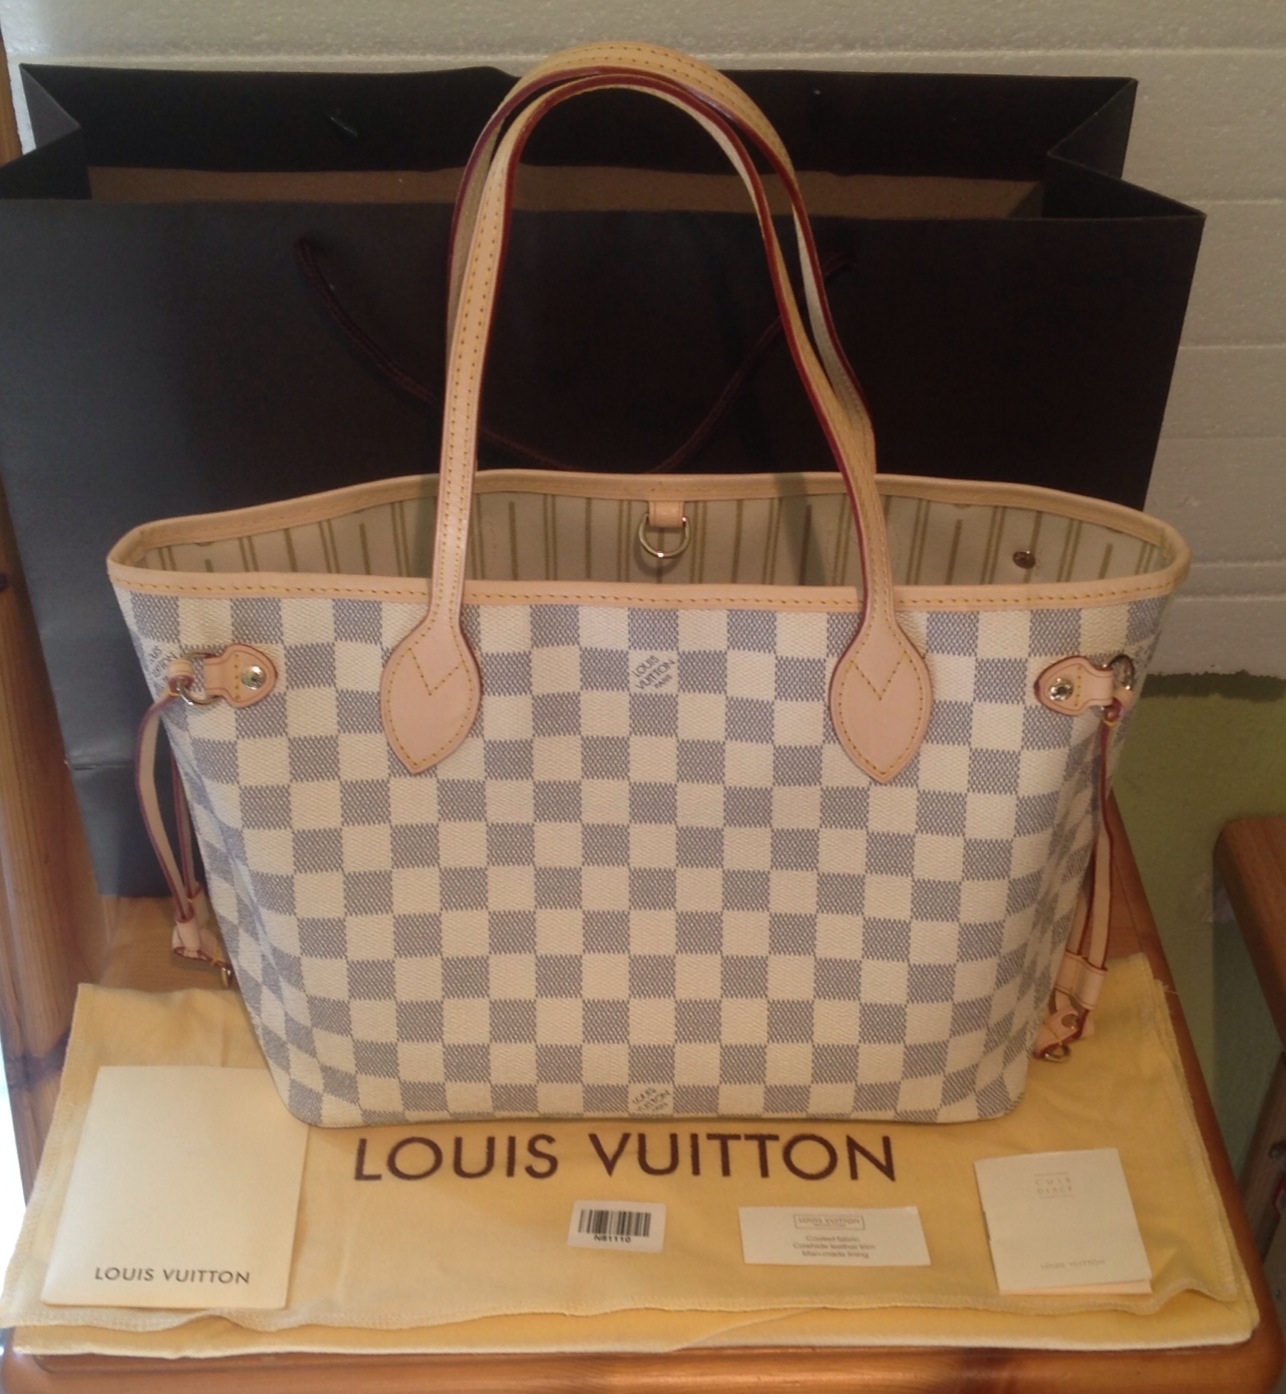 My Louis Vuitton Collection | emmerpaige18 Beauty Blog